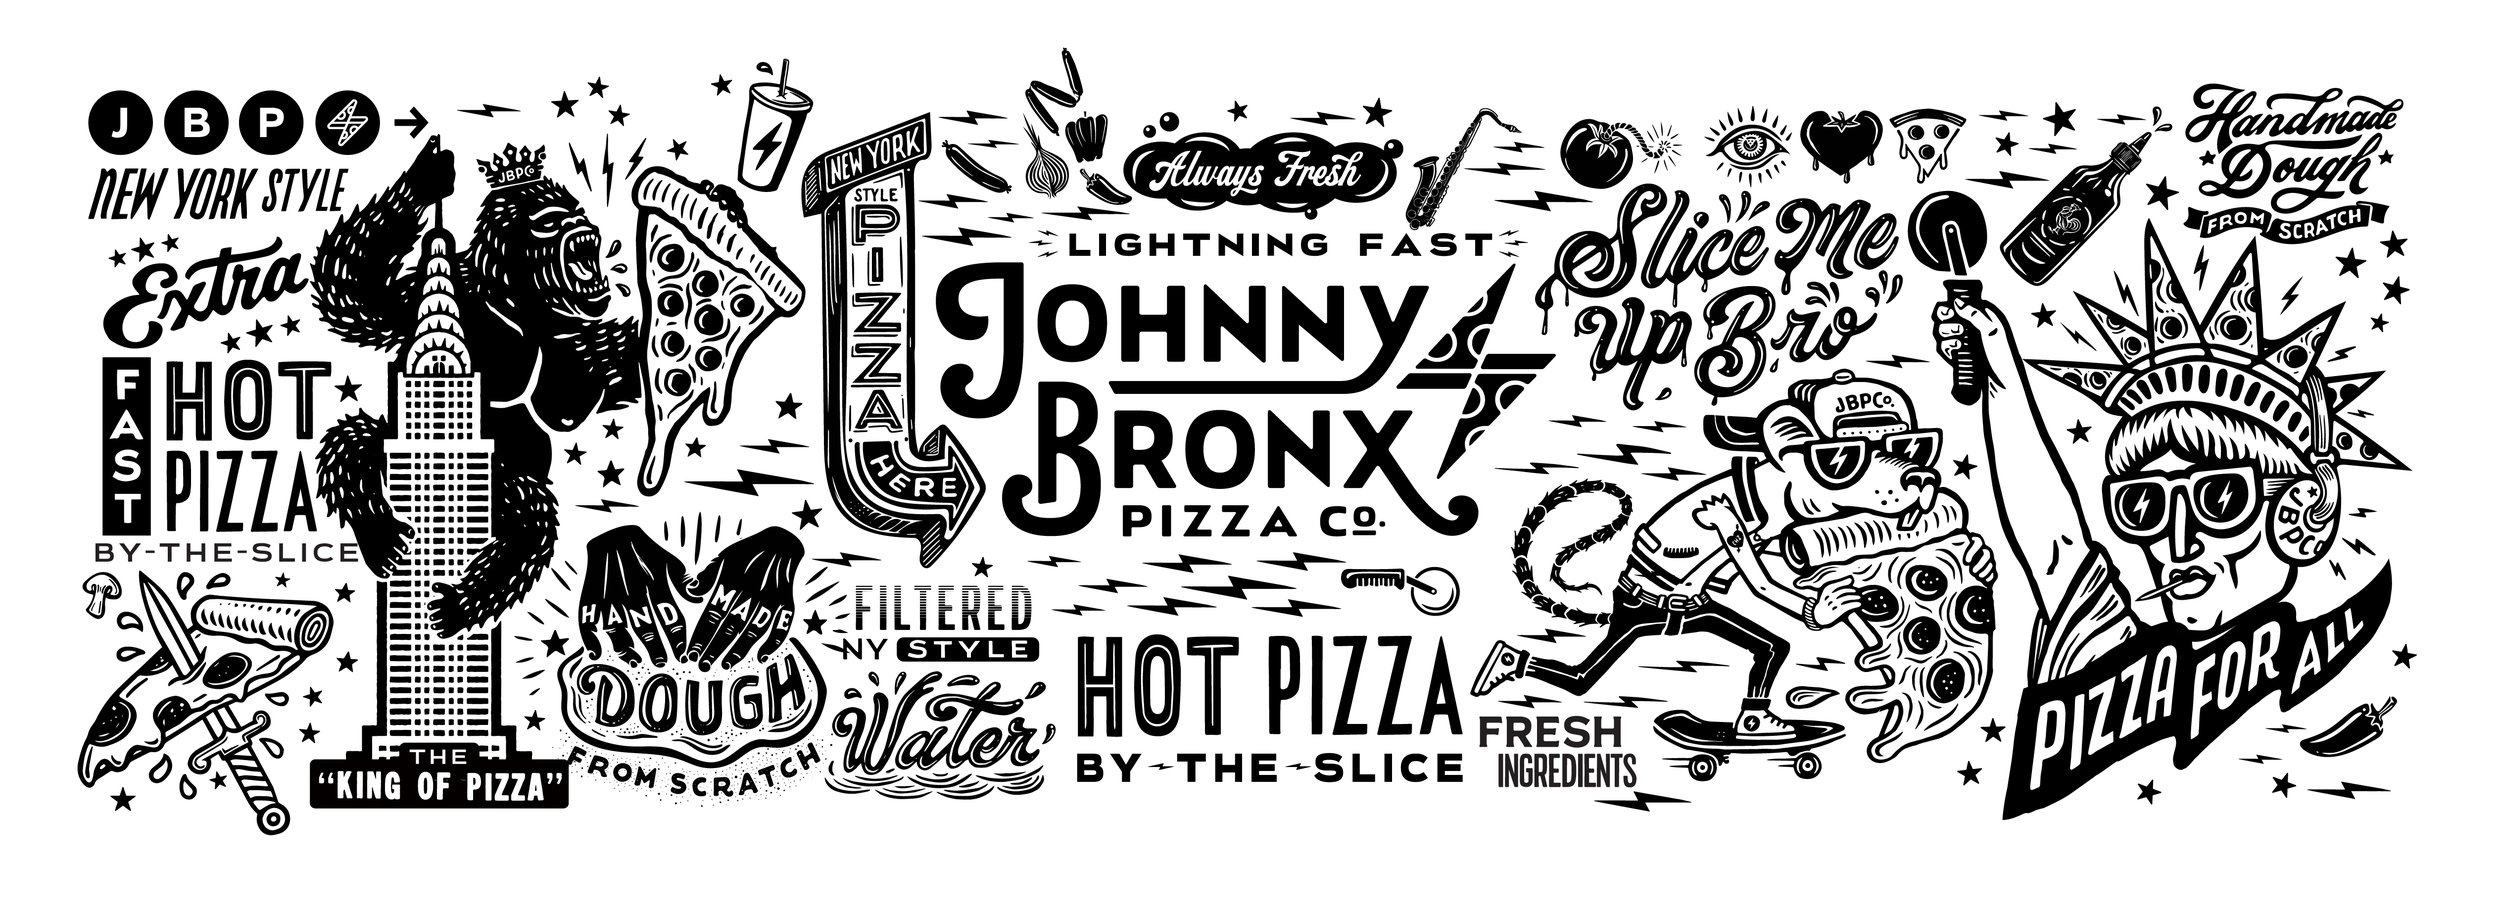 Johnny Bronx Collage Elements-02.jpg